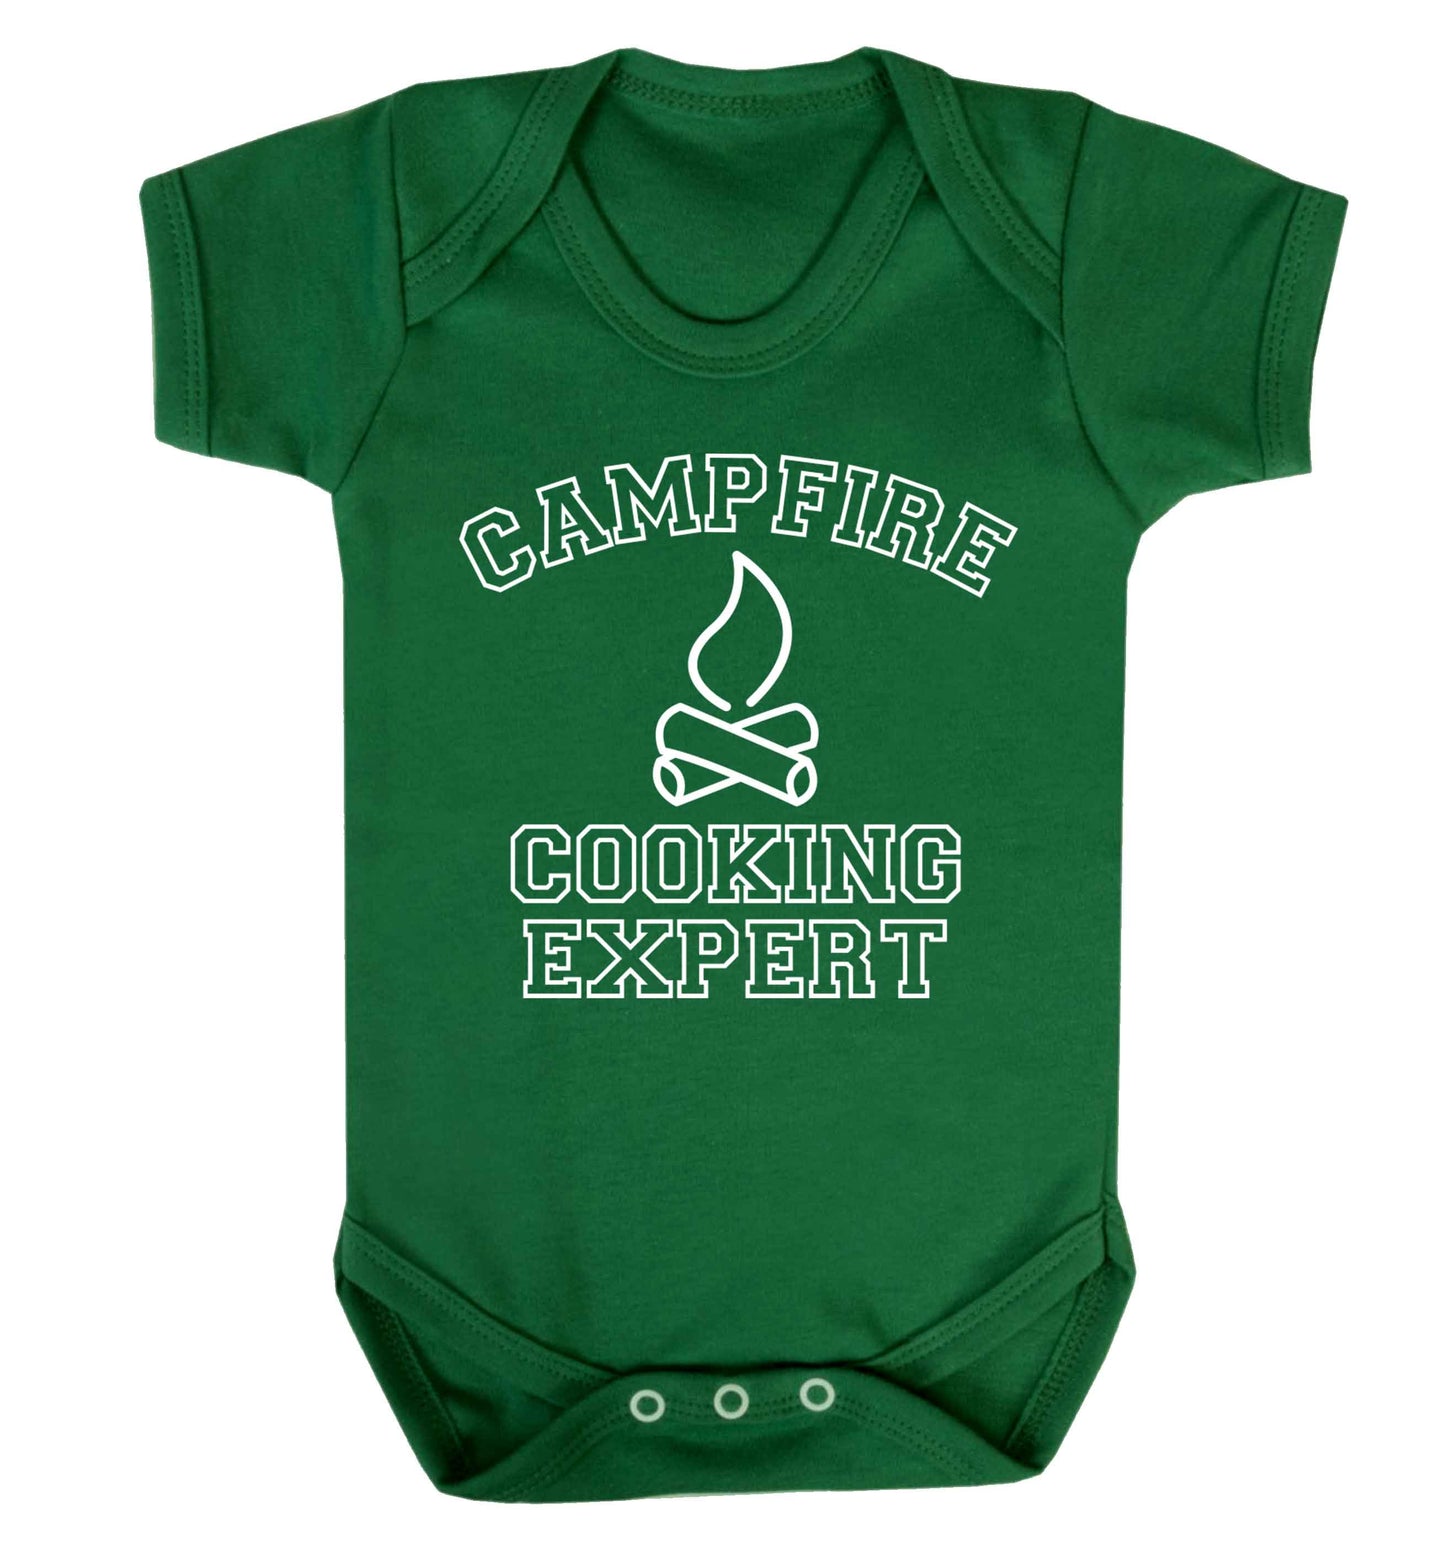 Campfire cooking expert Baby Vest green 18-24 months